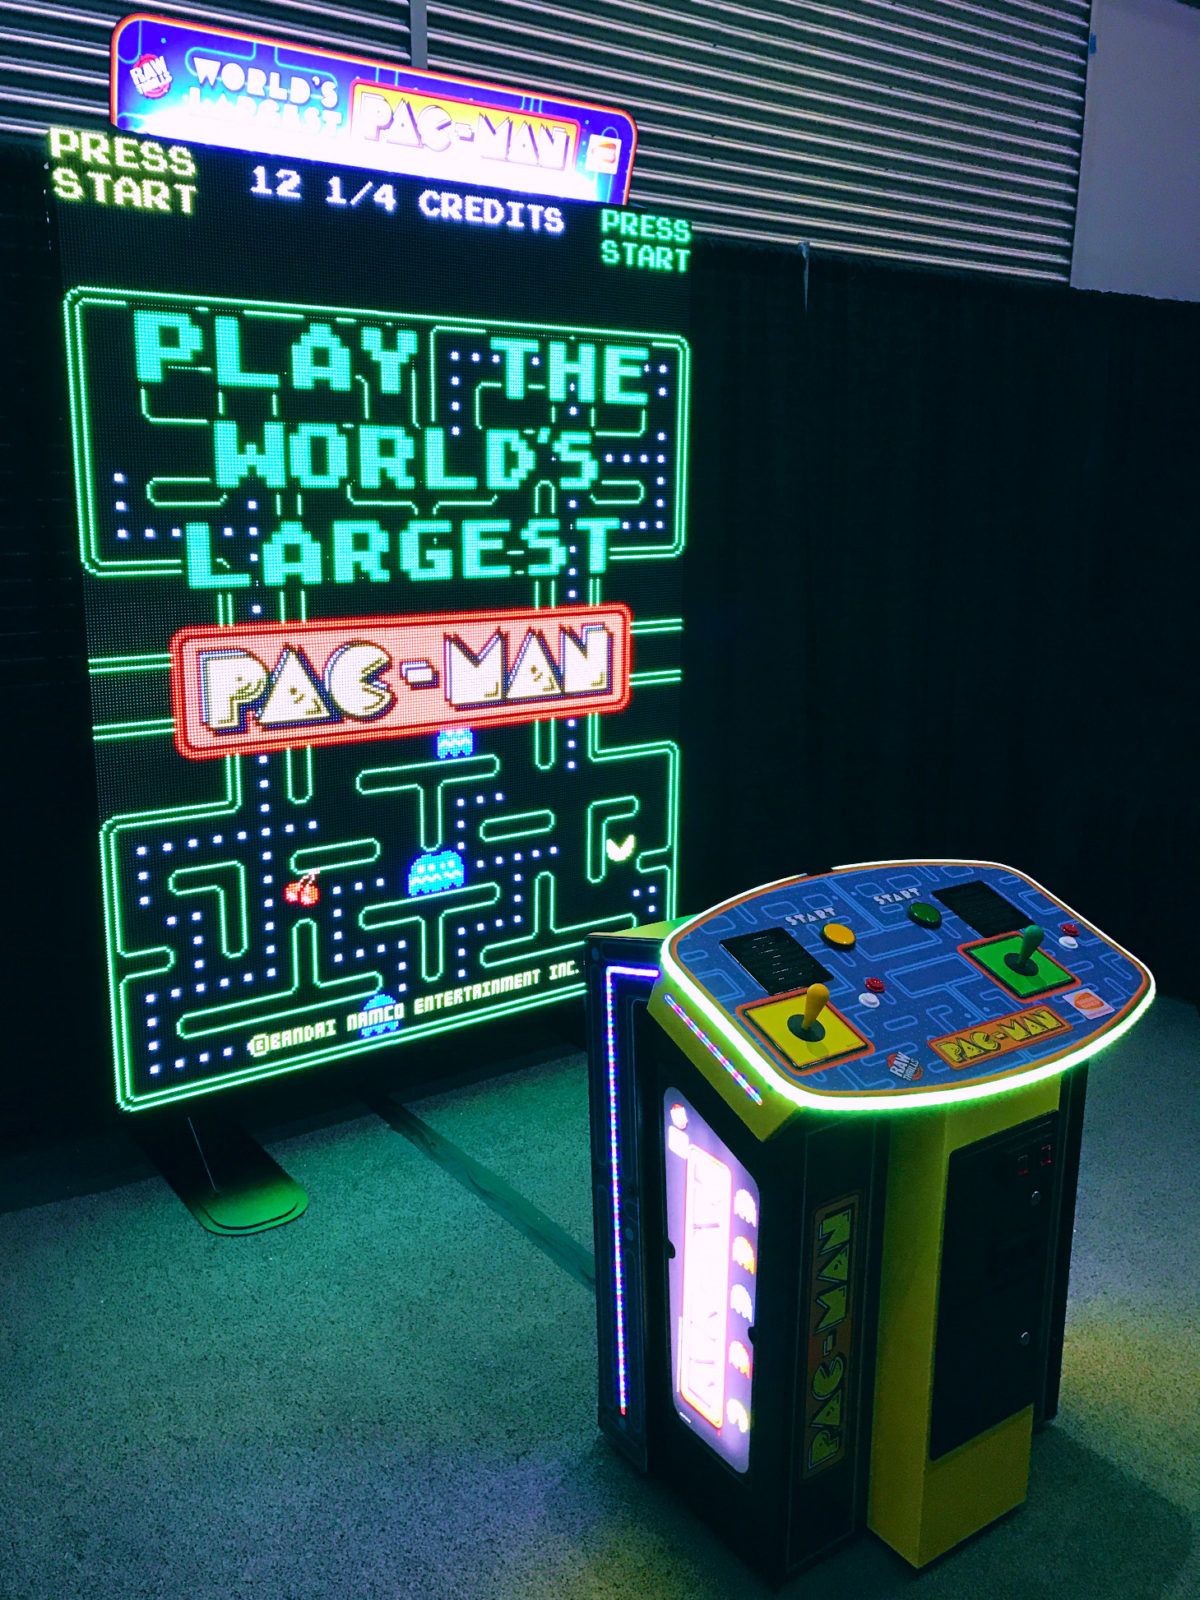 World's Largest Pac-Man arcade game rental